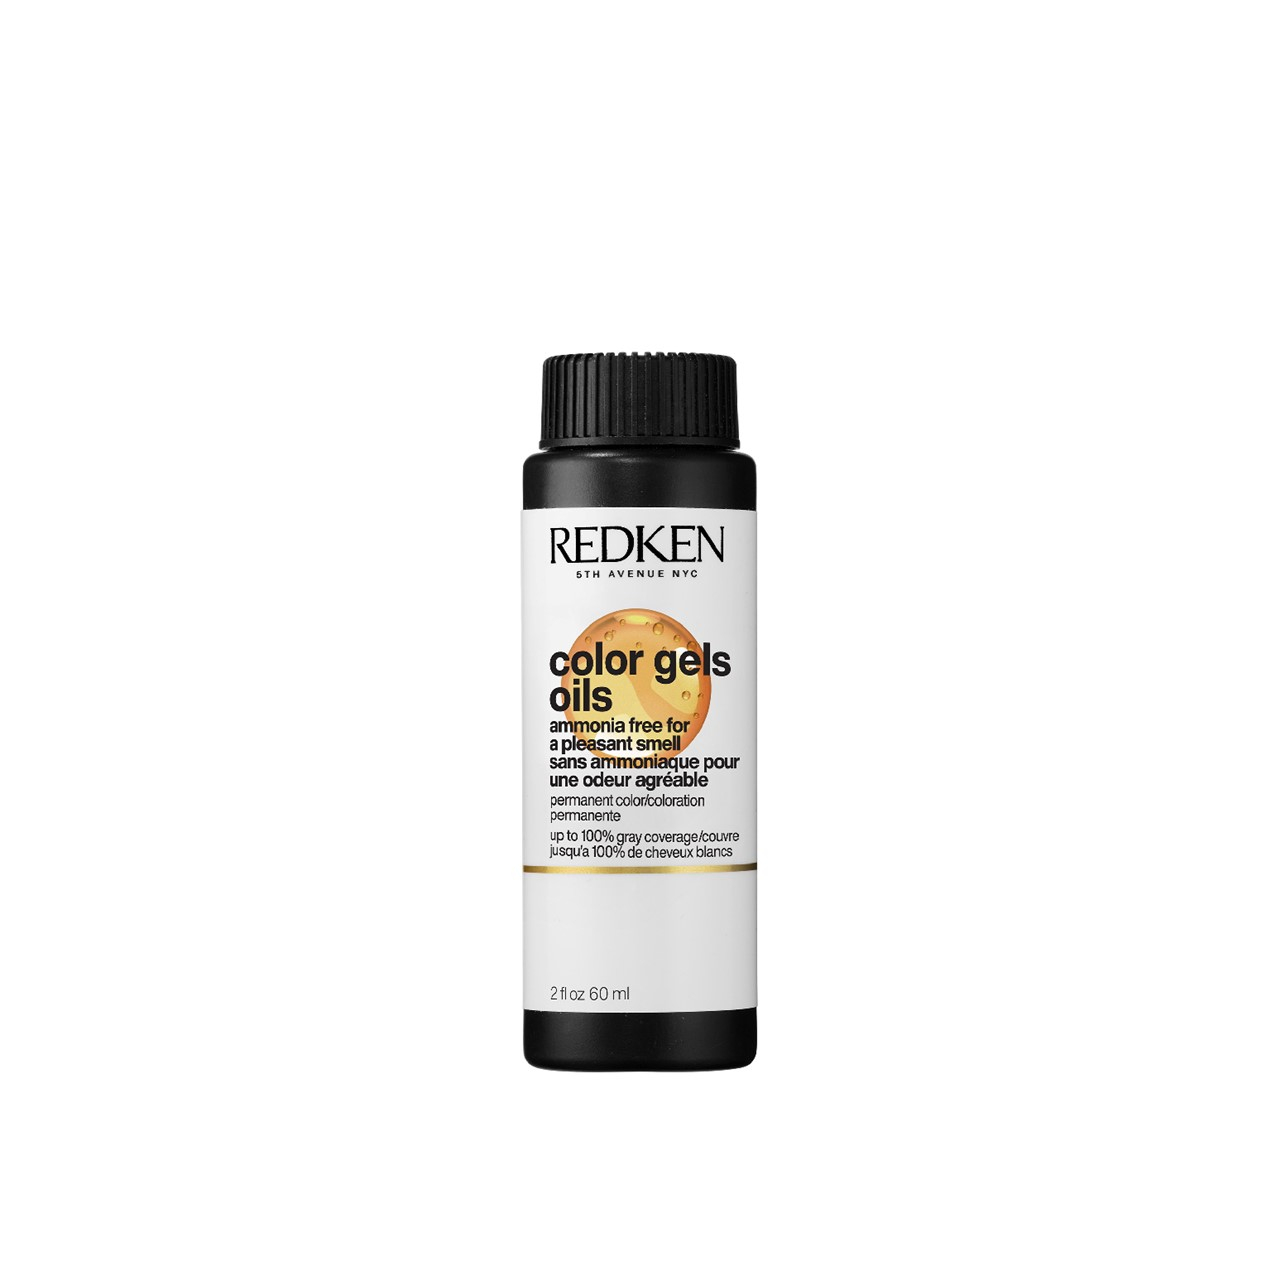 Redken Color Gels Oils 6RR Blaze Permanent Hair Dye 60ml (2.03 fl oz)